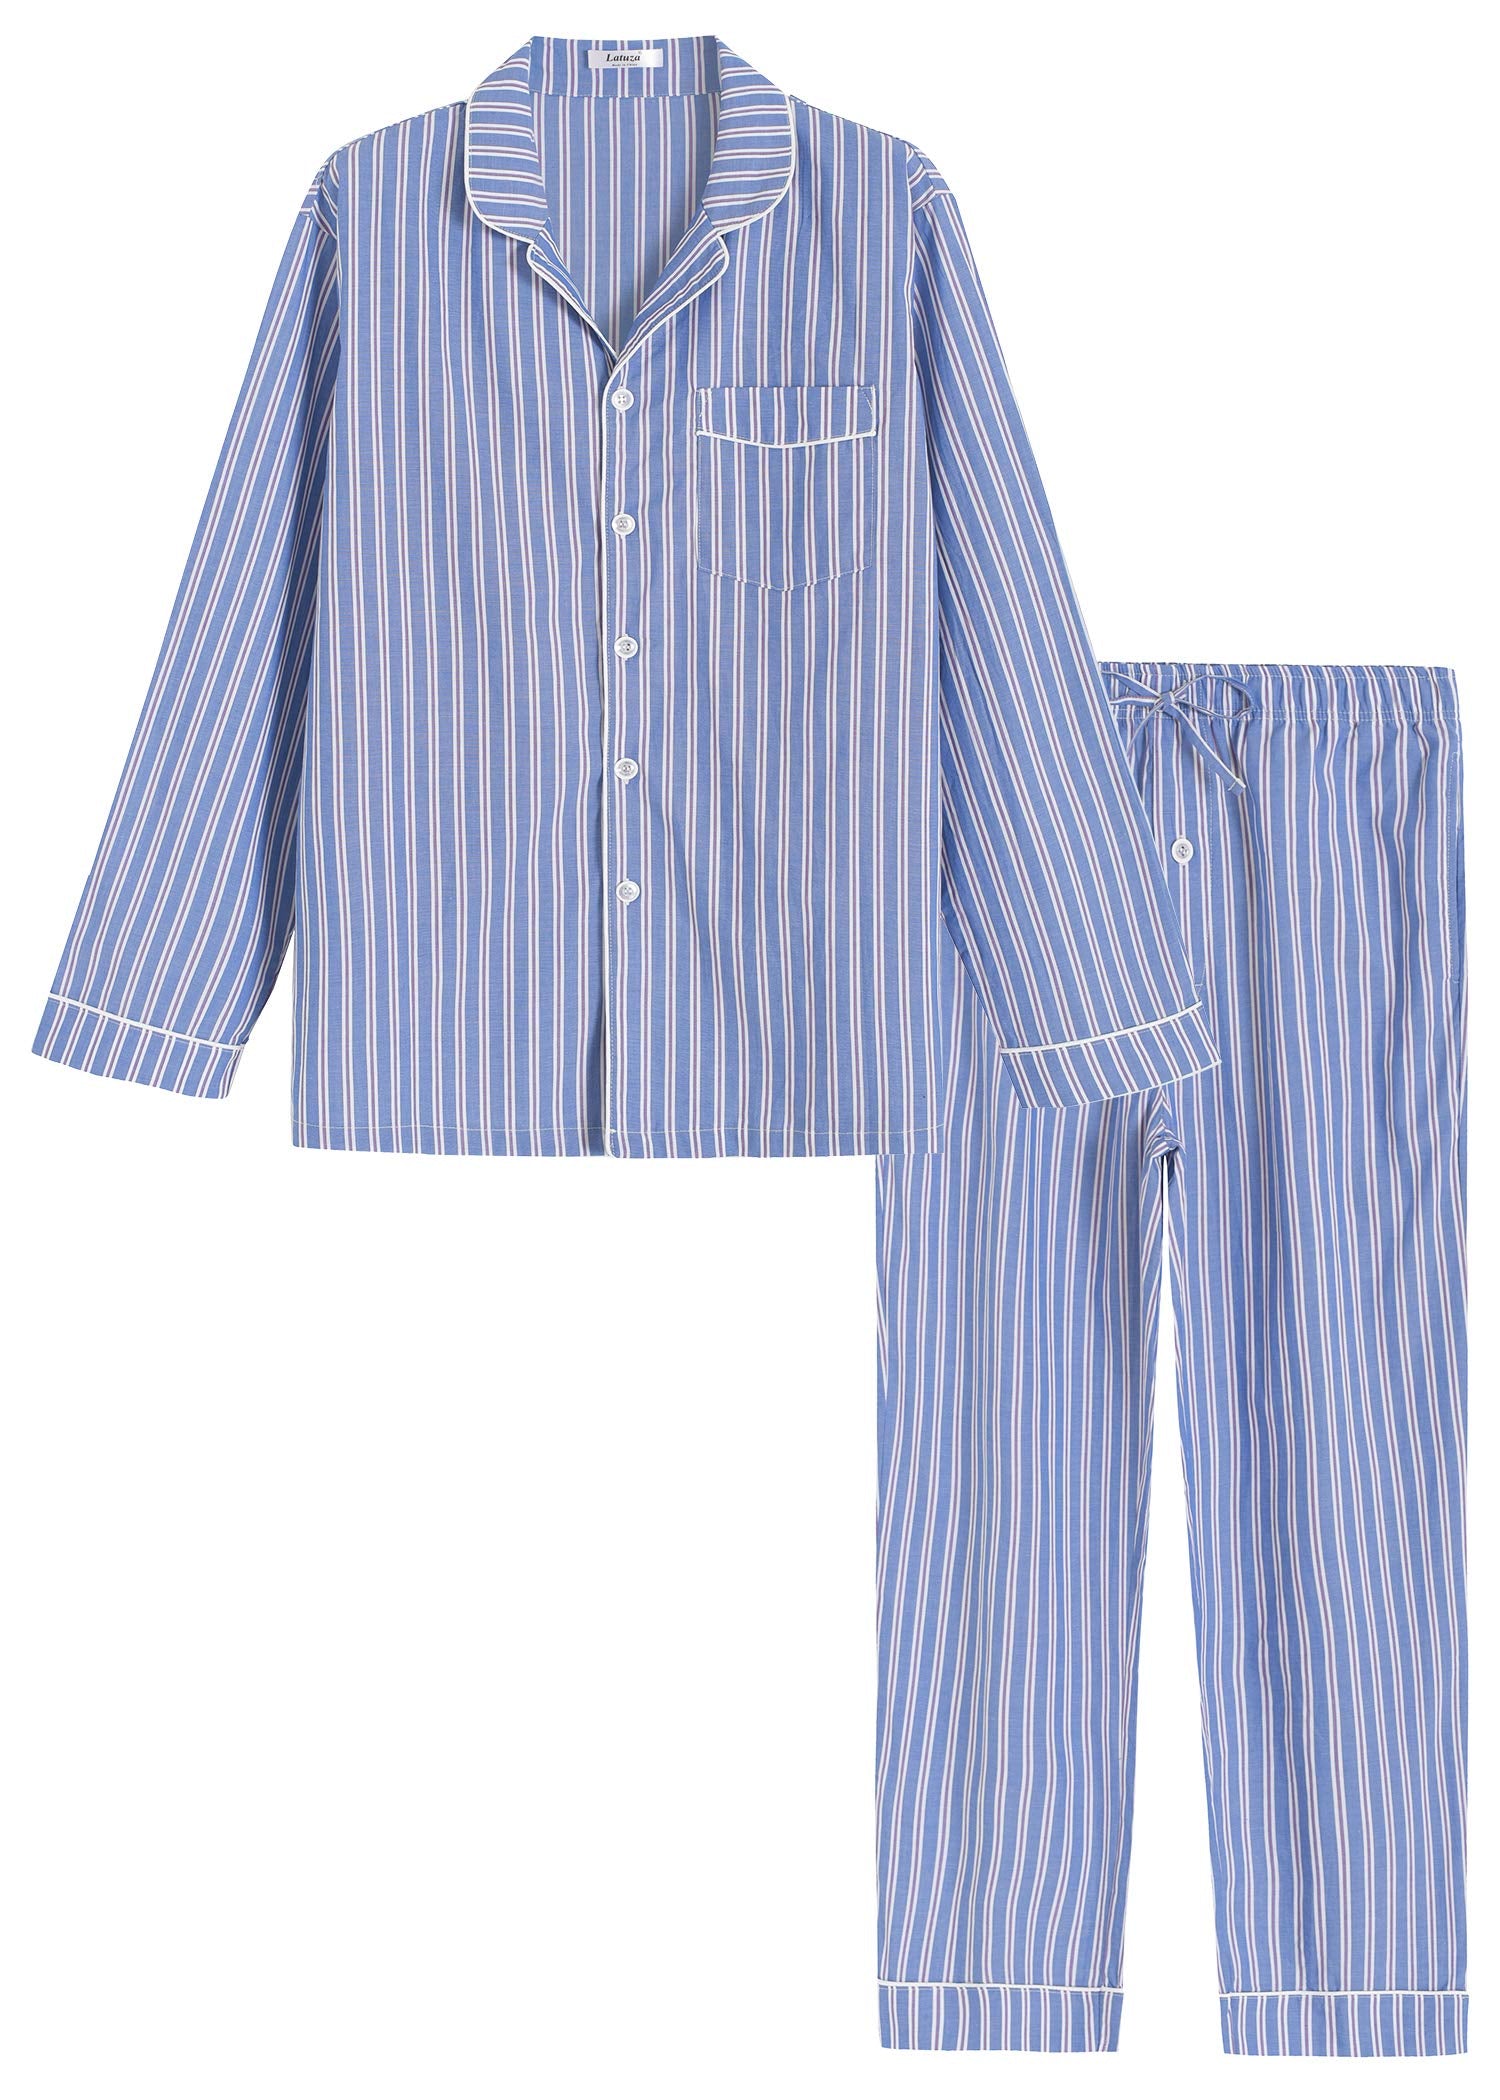 Men's Lightweight Cotton Pajamas Long Sleeves Shirt Pants Set - Latuza